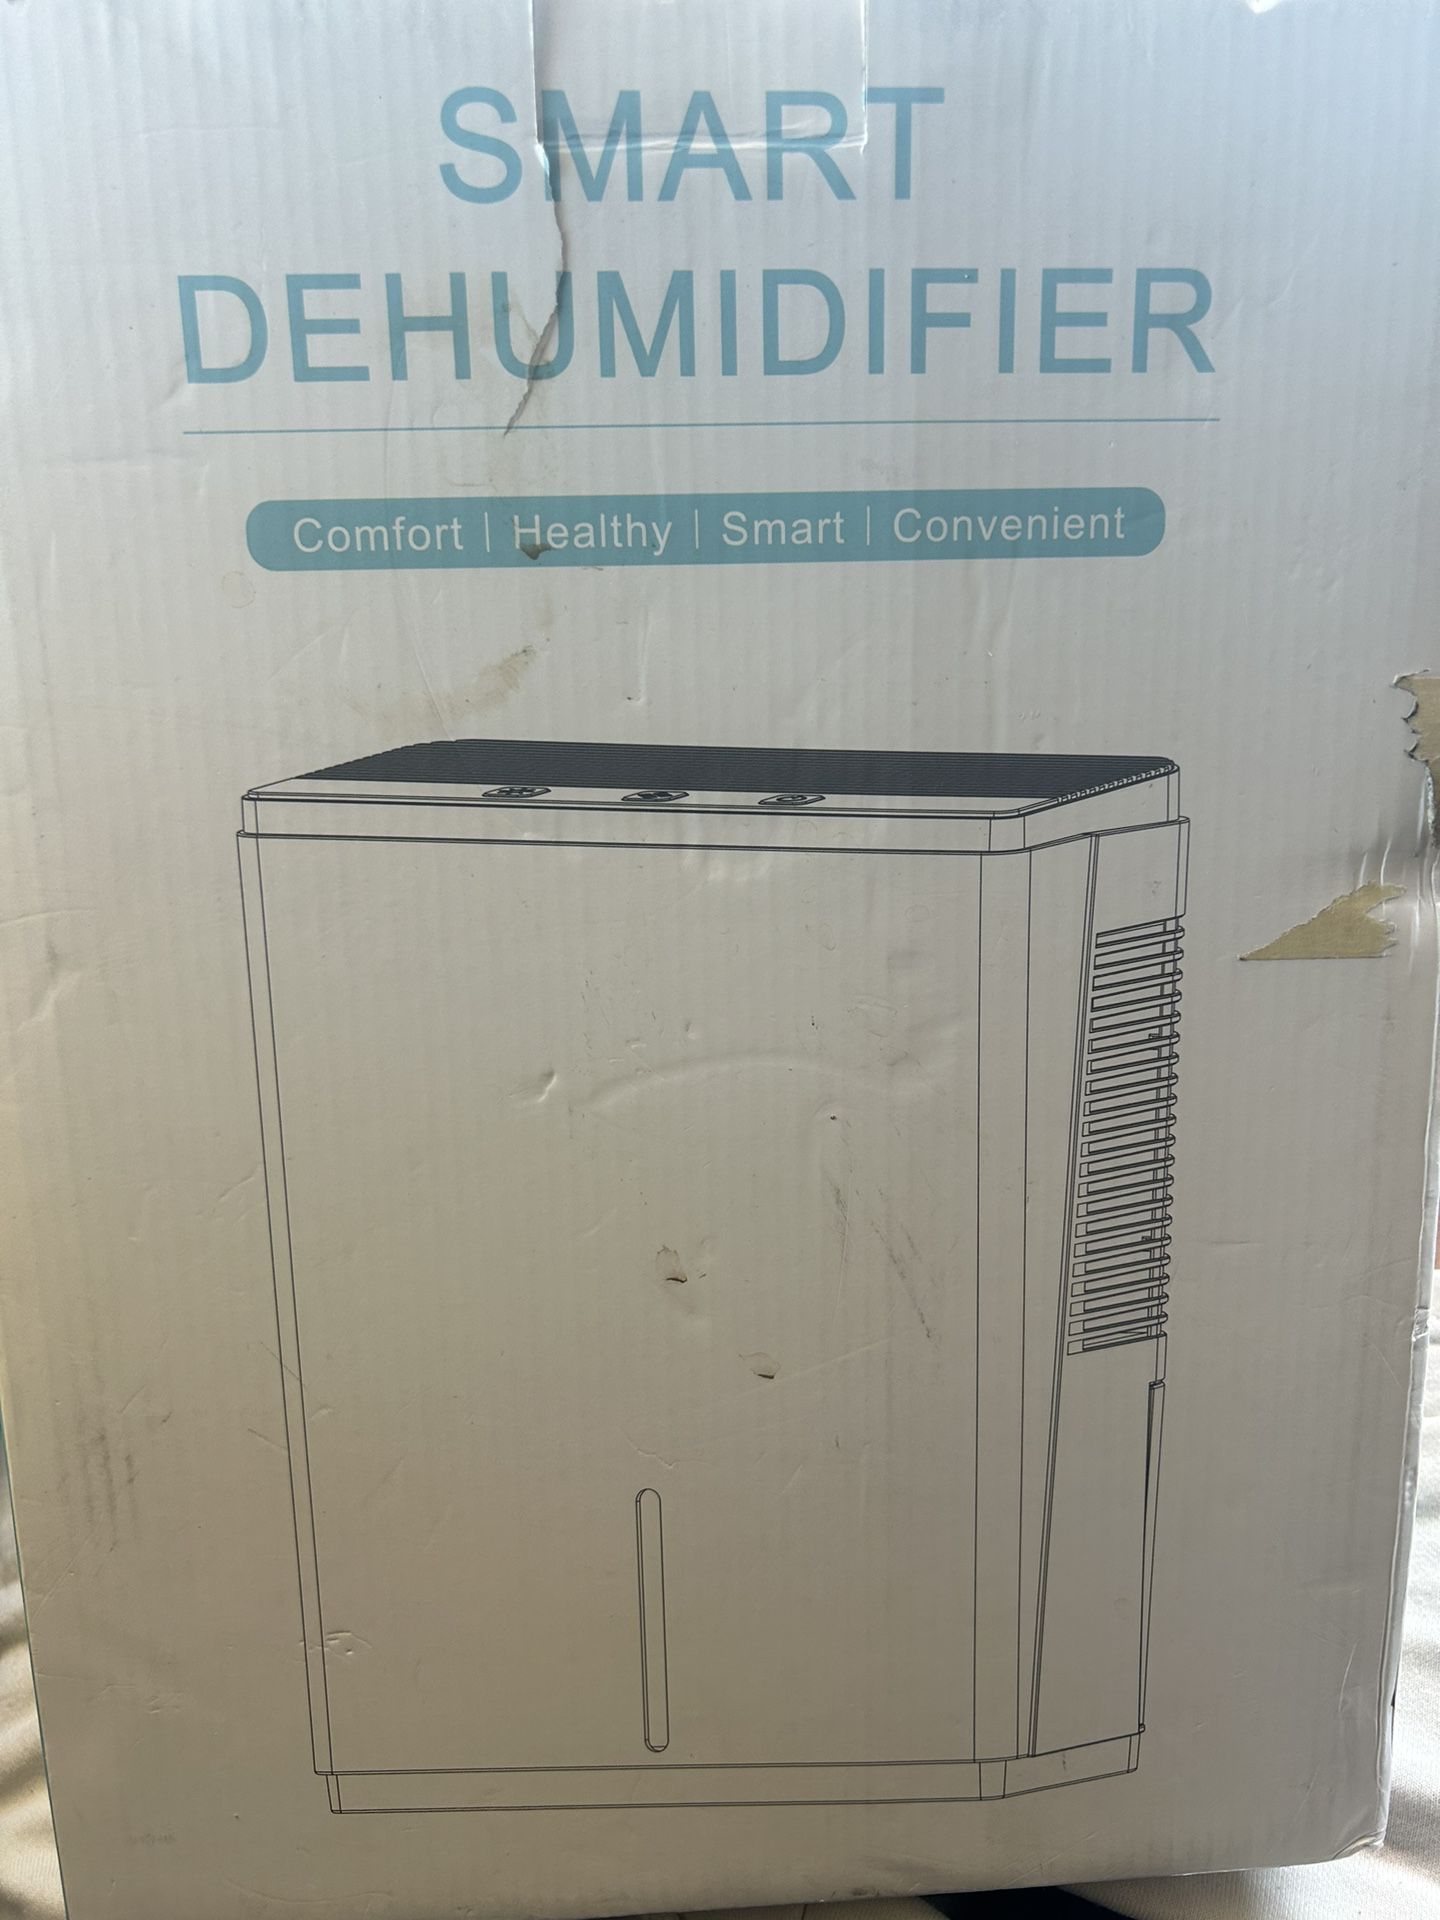 Smart Dehumidifier